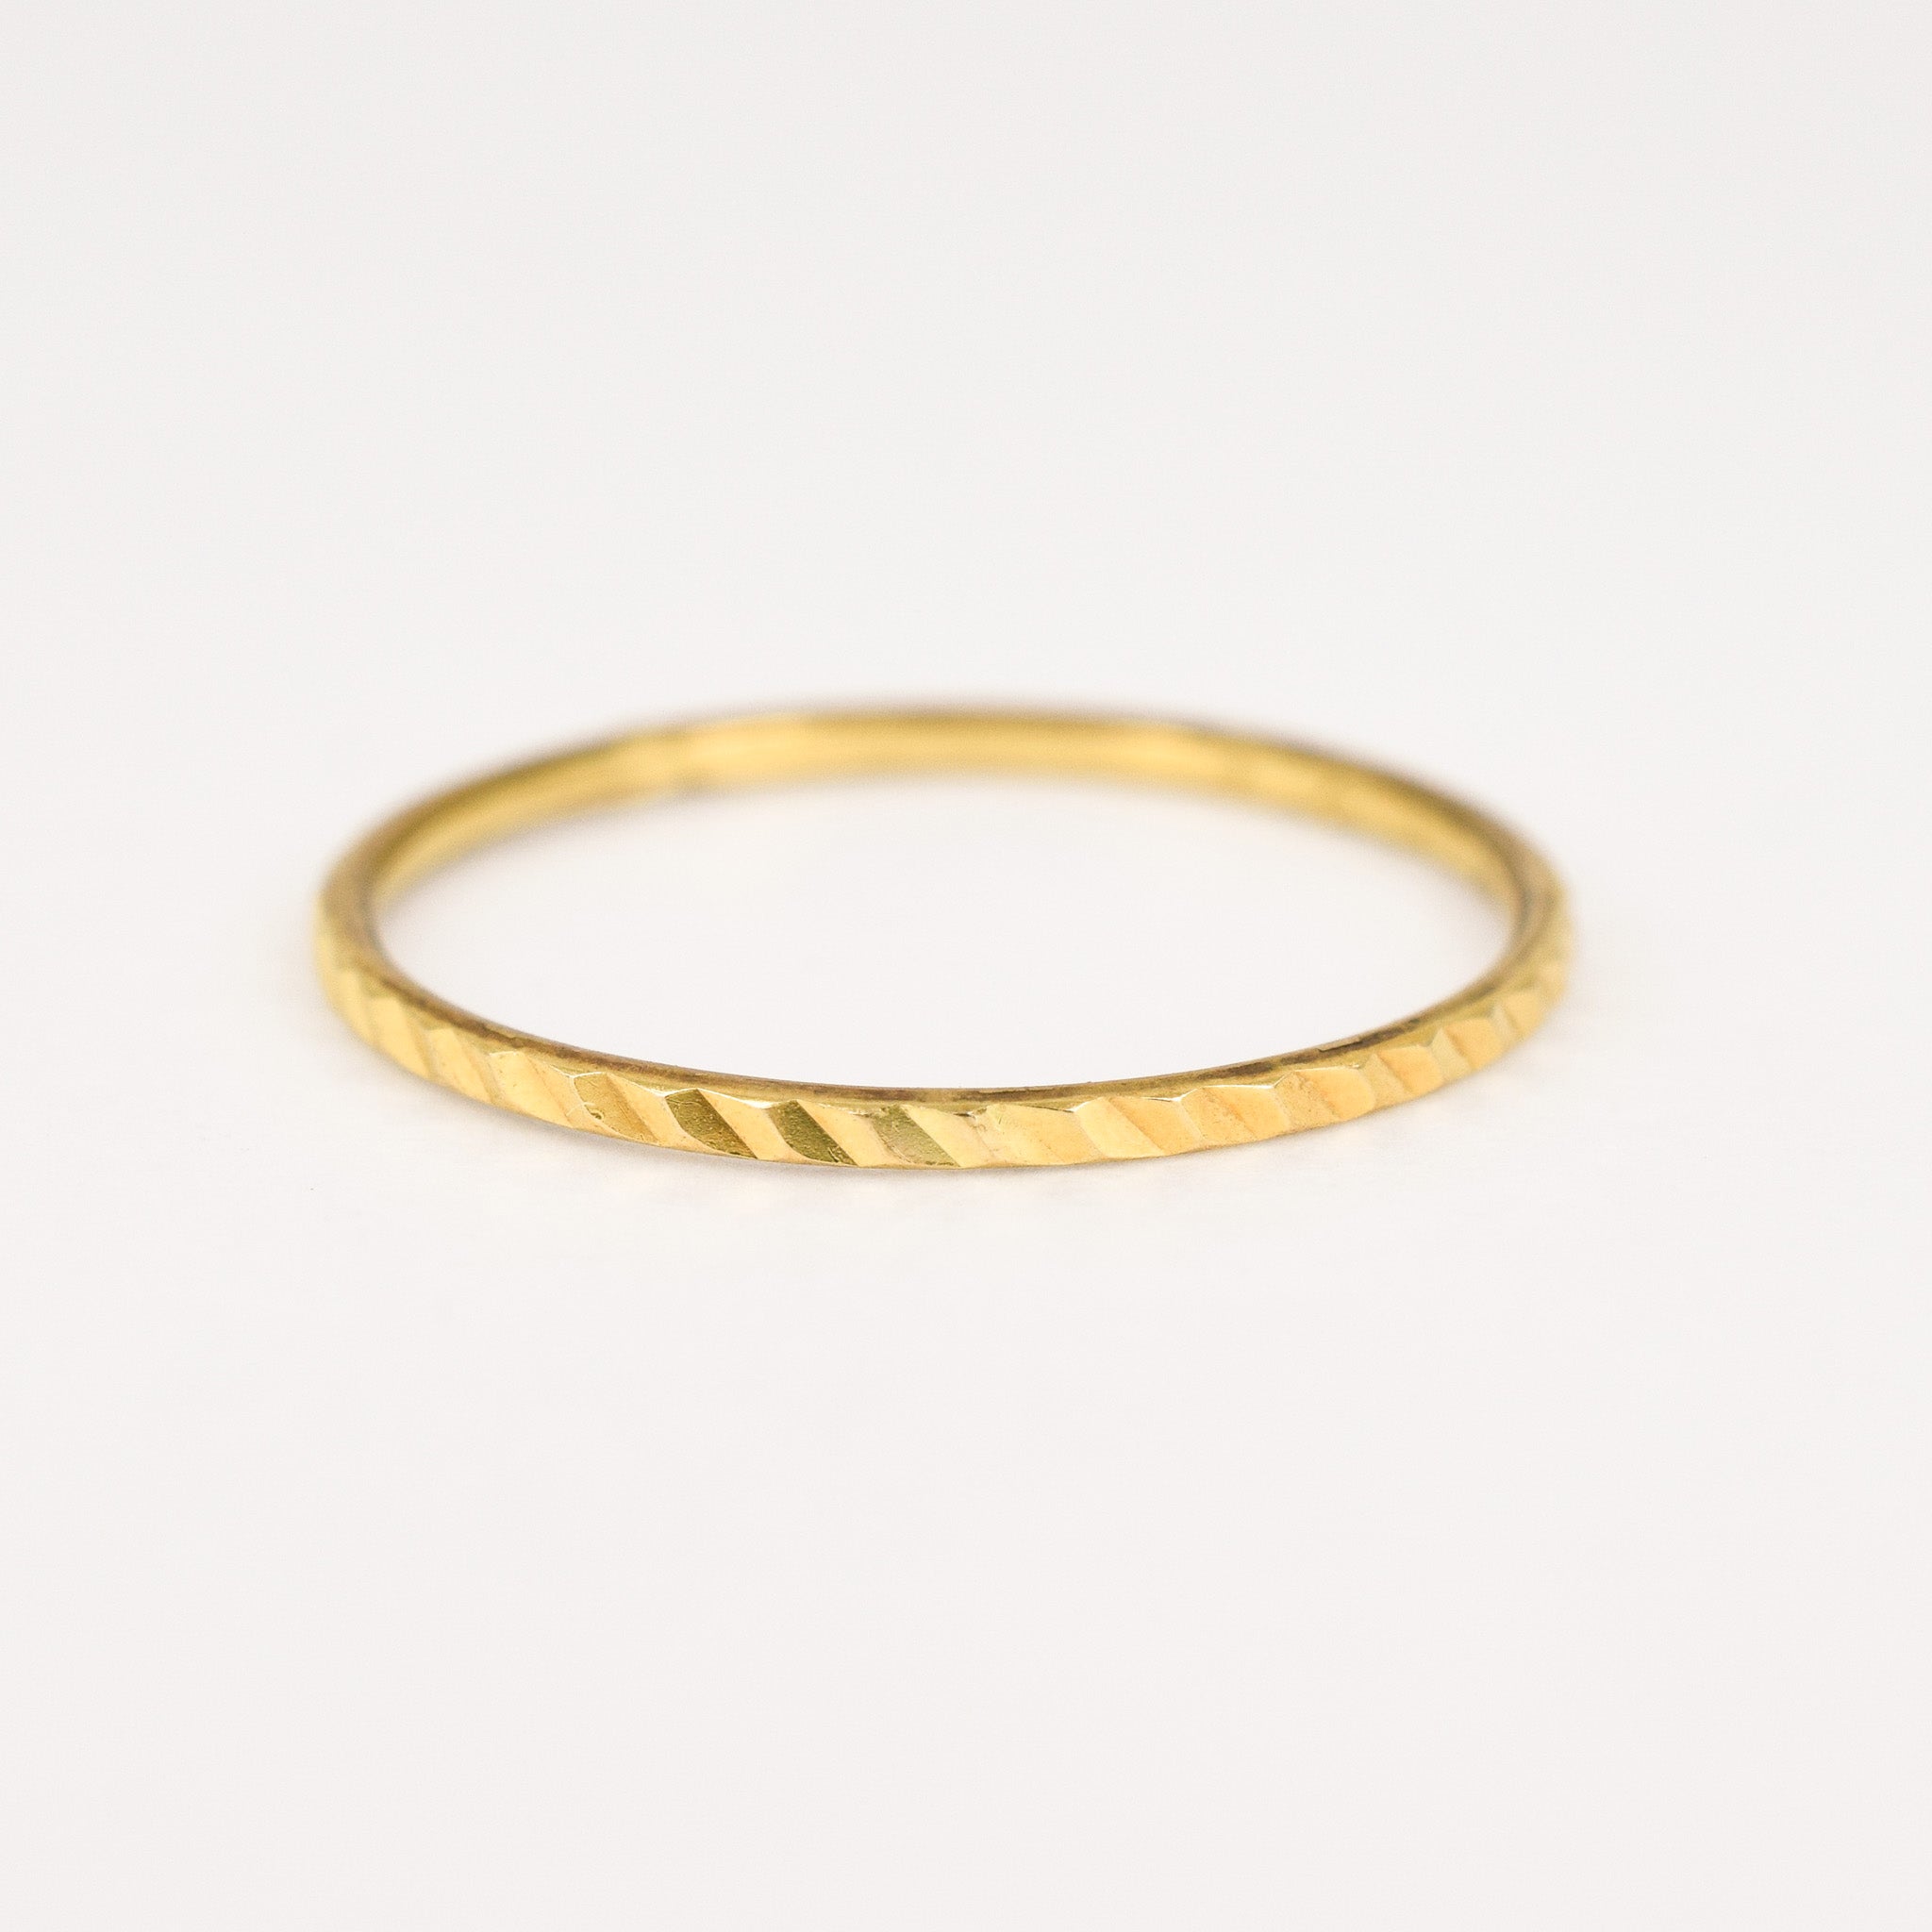 Vintage gold stacking ring, folklor vintage jewelry canada